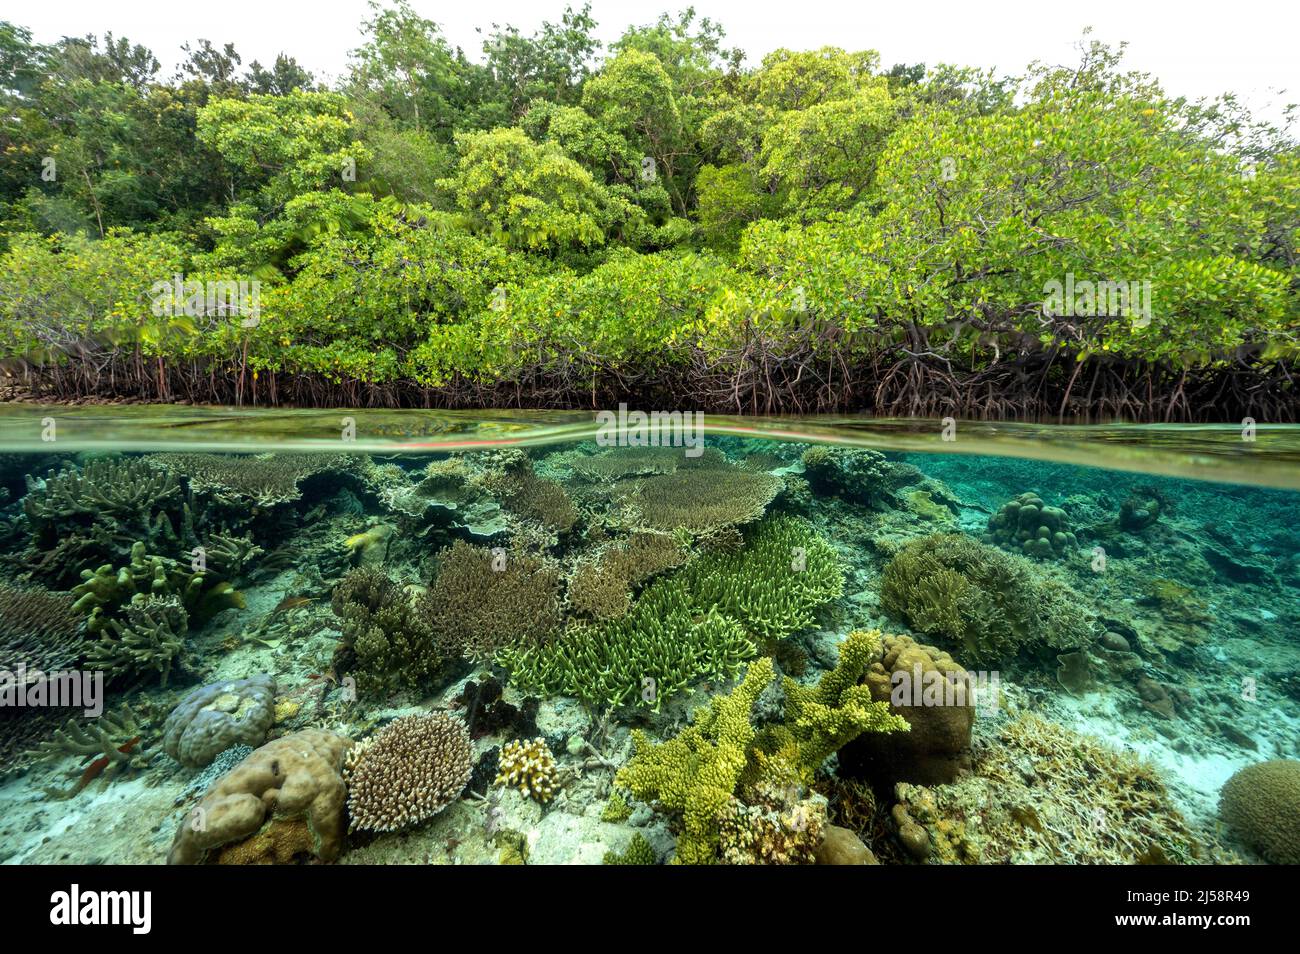 Foresta di mangrovie e barriere coralline in Split shot, Gam Island Raja Ampat Indnonesia. Foto Stock